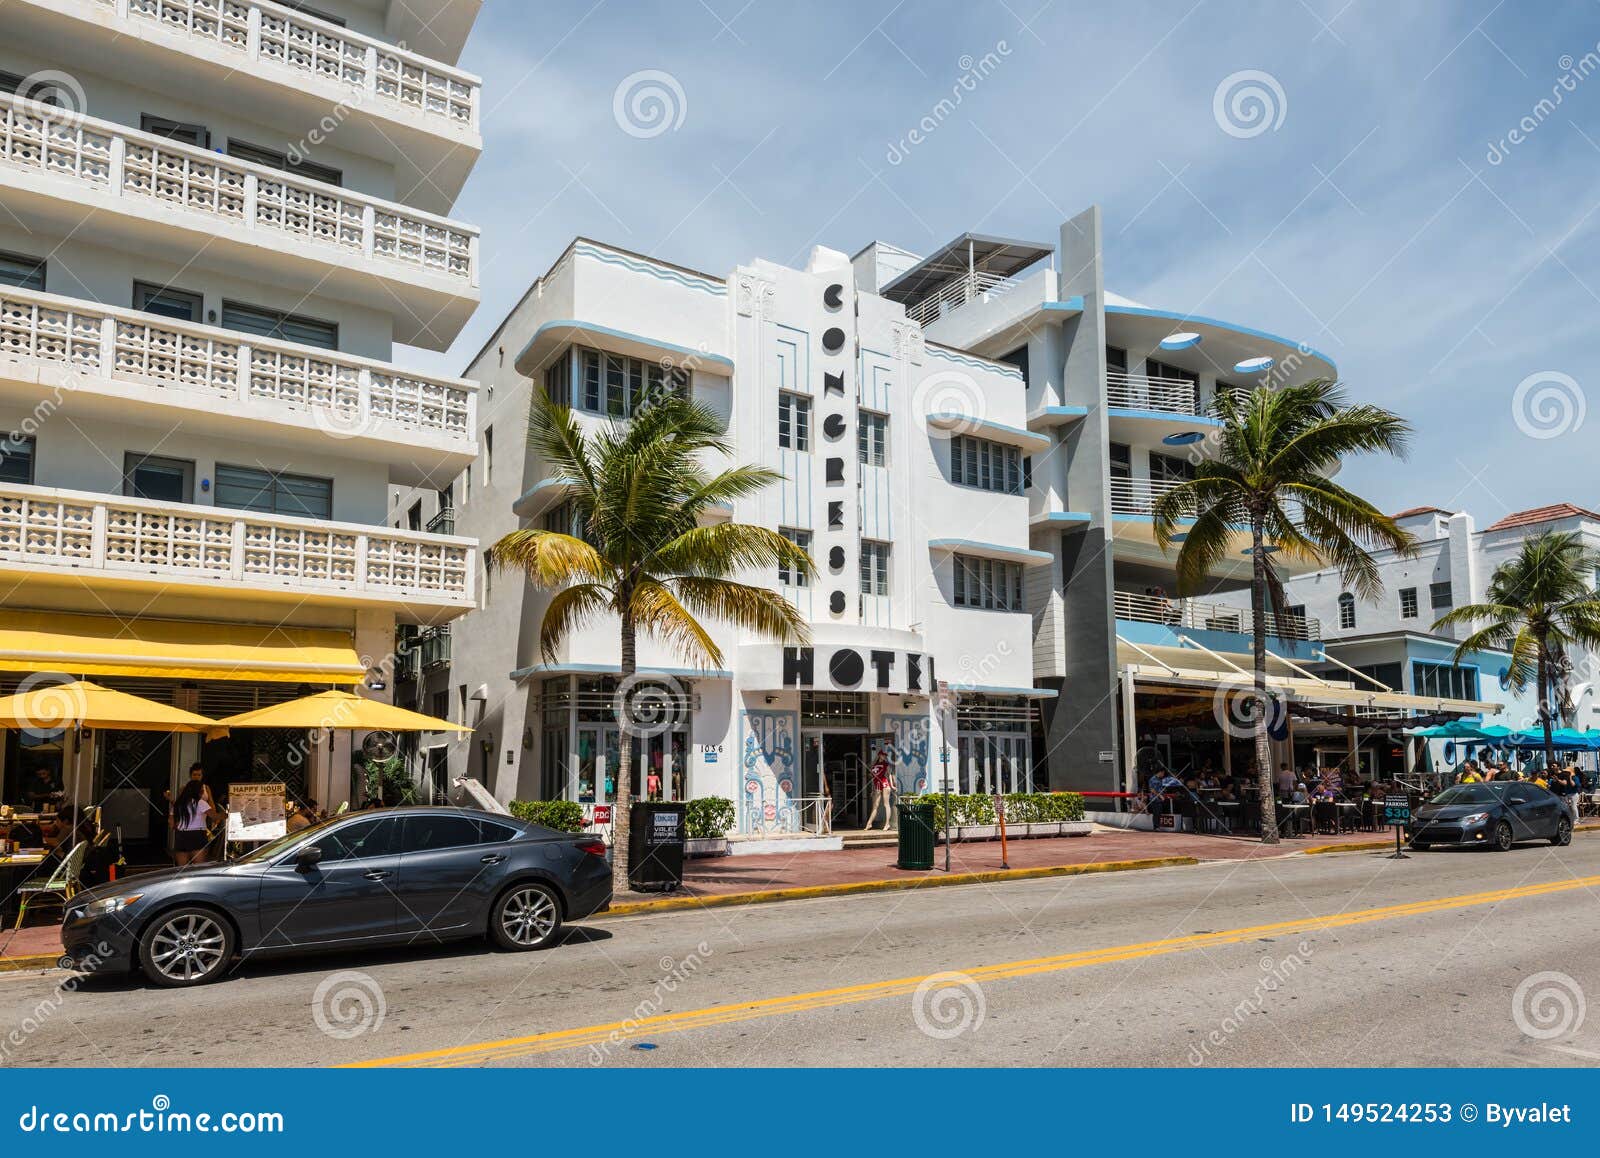 Art Deco Historic District In Miami Beach South Beach